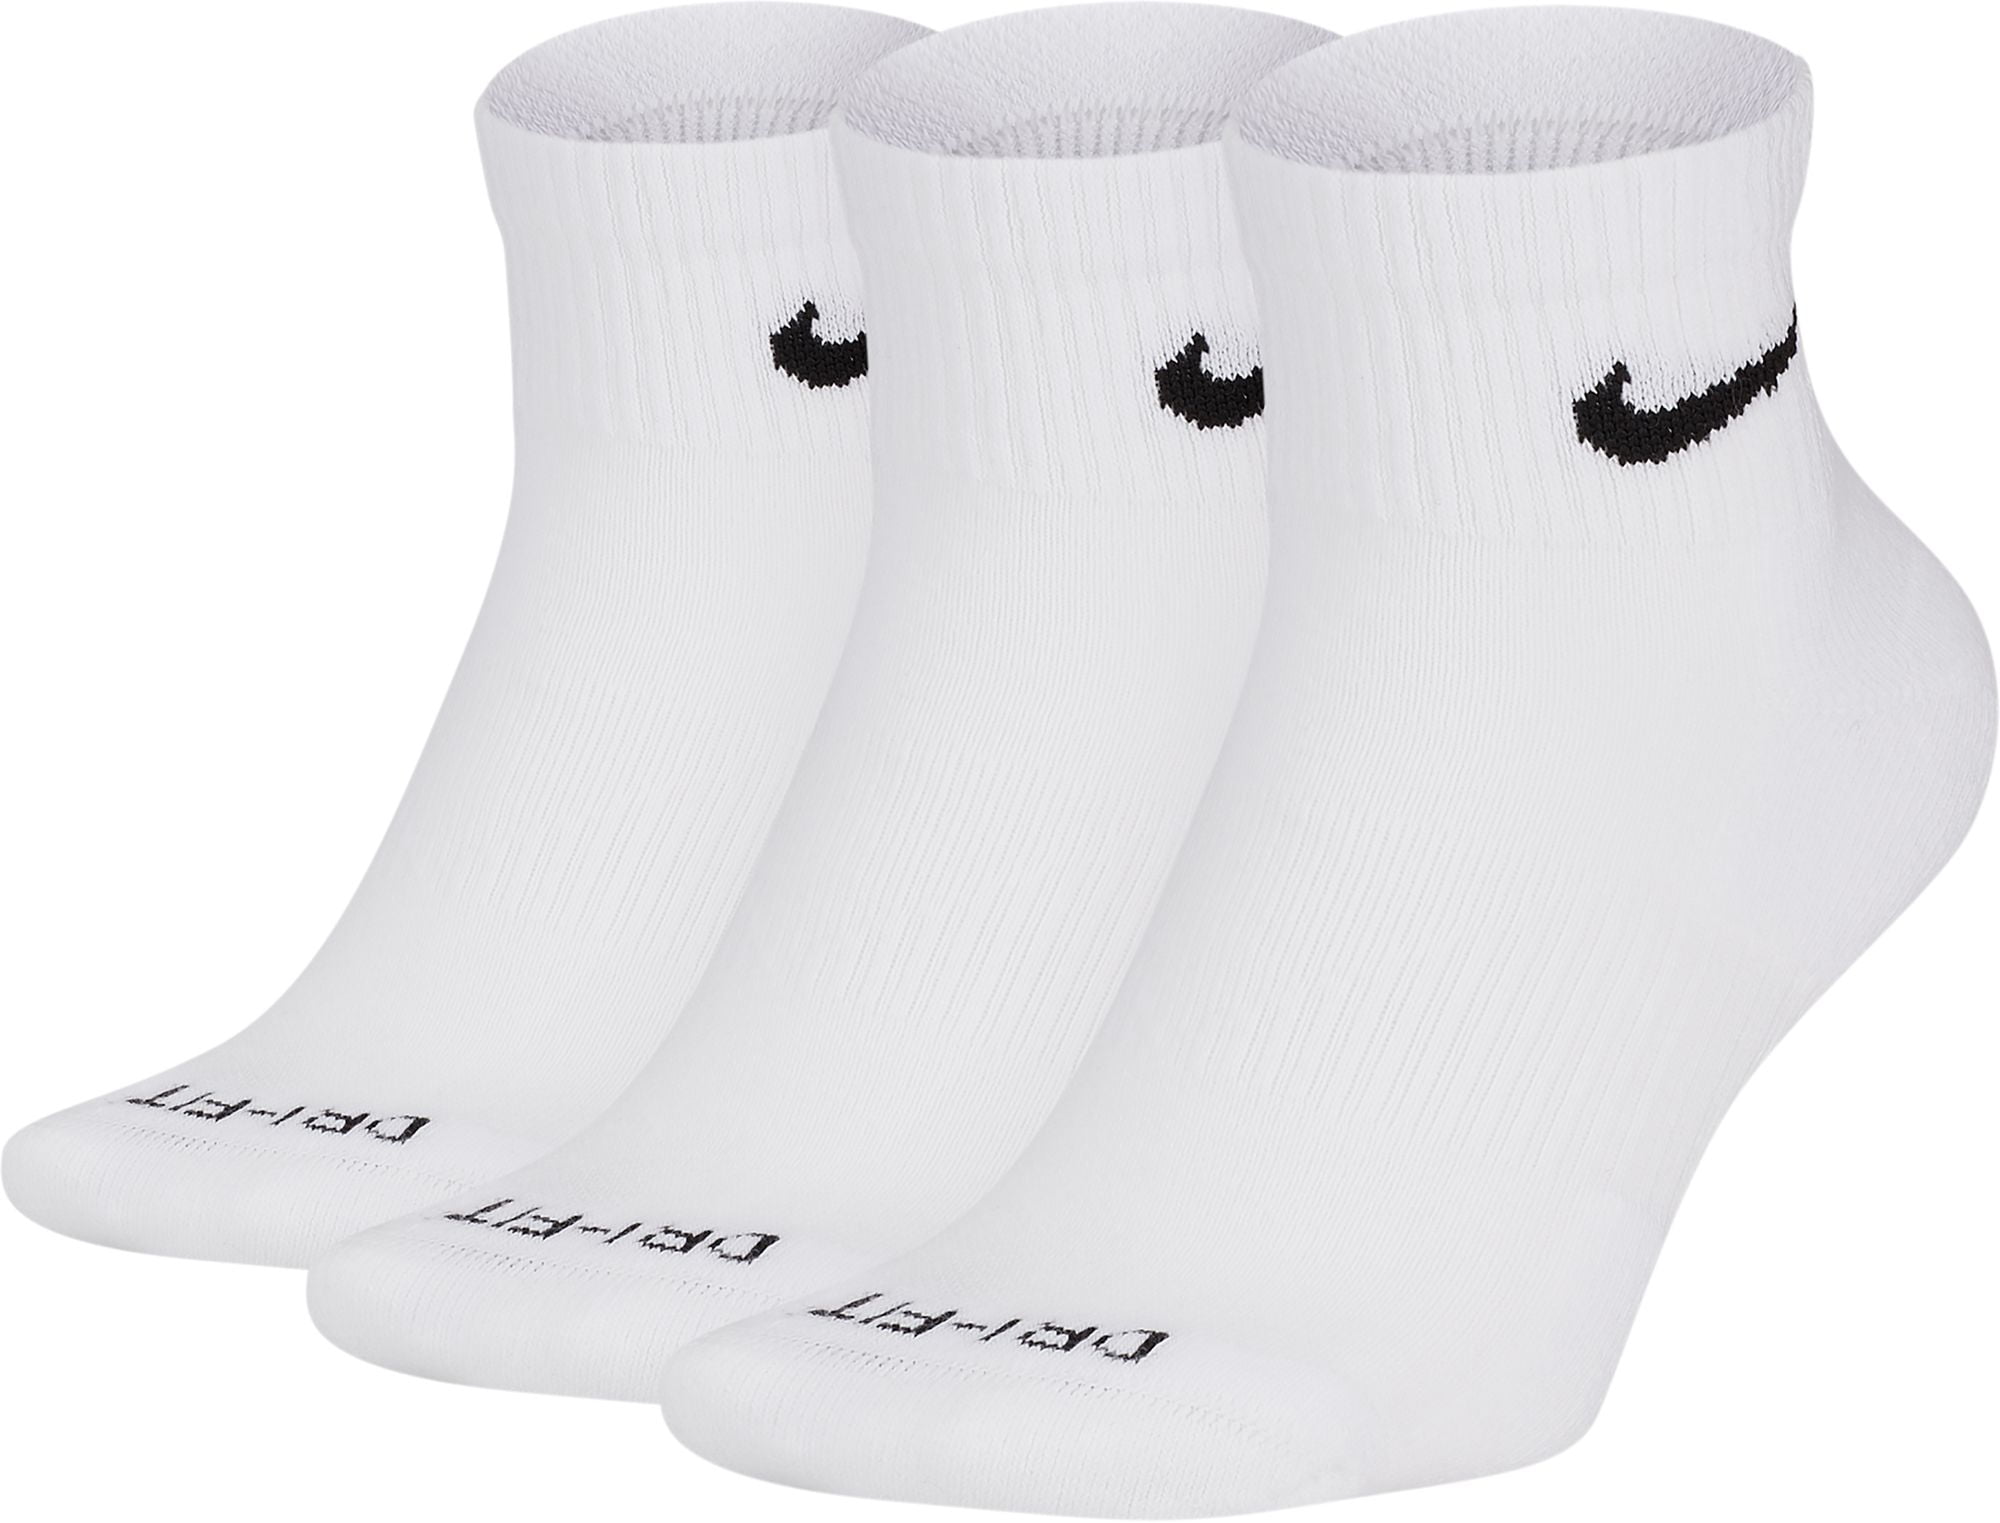 Nike Everyday Plus Cushion Ankle Training Socks Pack Walmart Com